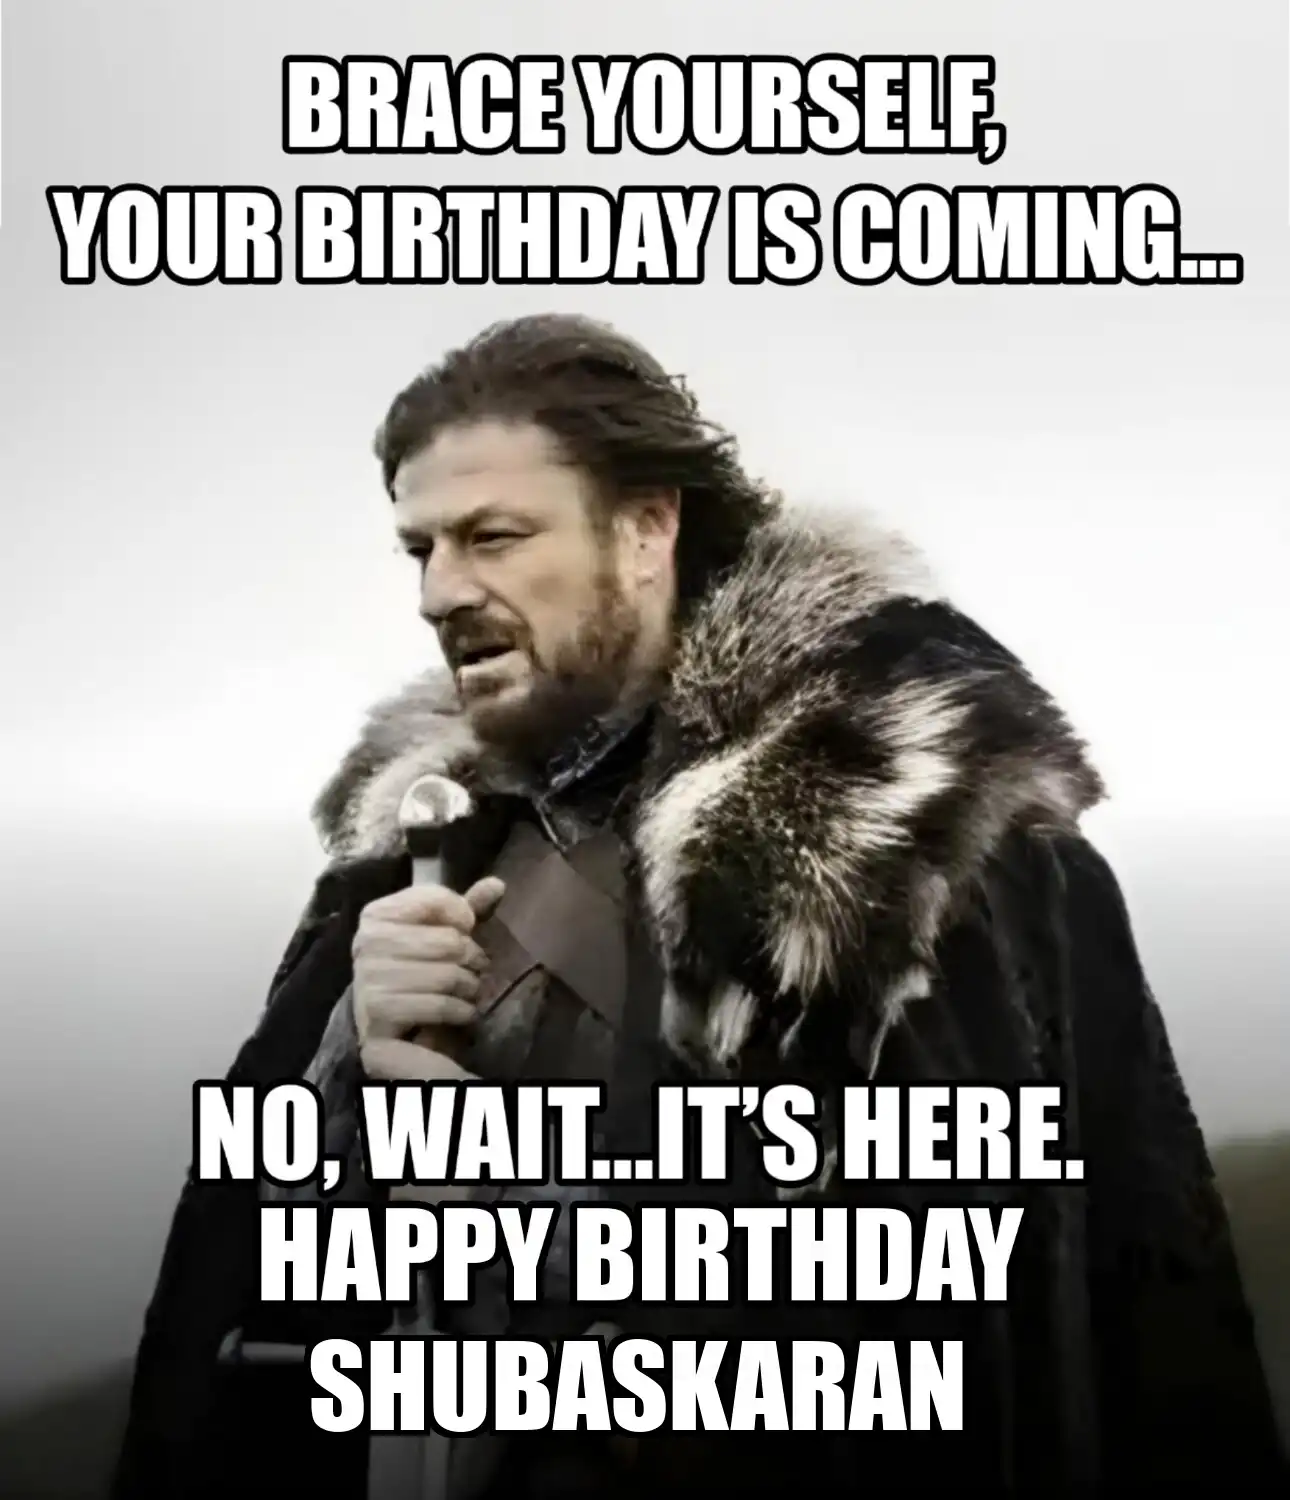 Happy Birthday Shubaskaran Brace Yourself Your Birthday Is Coming Meme